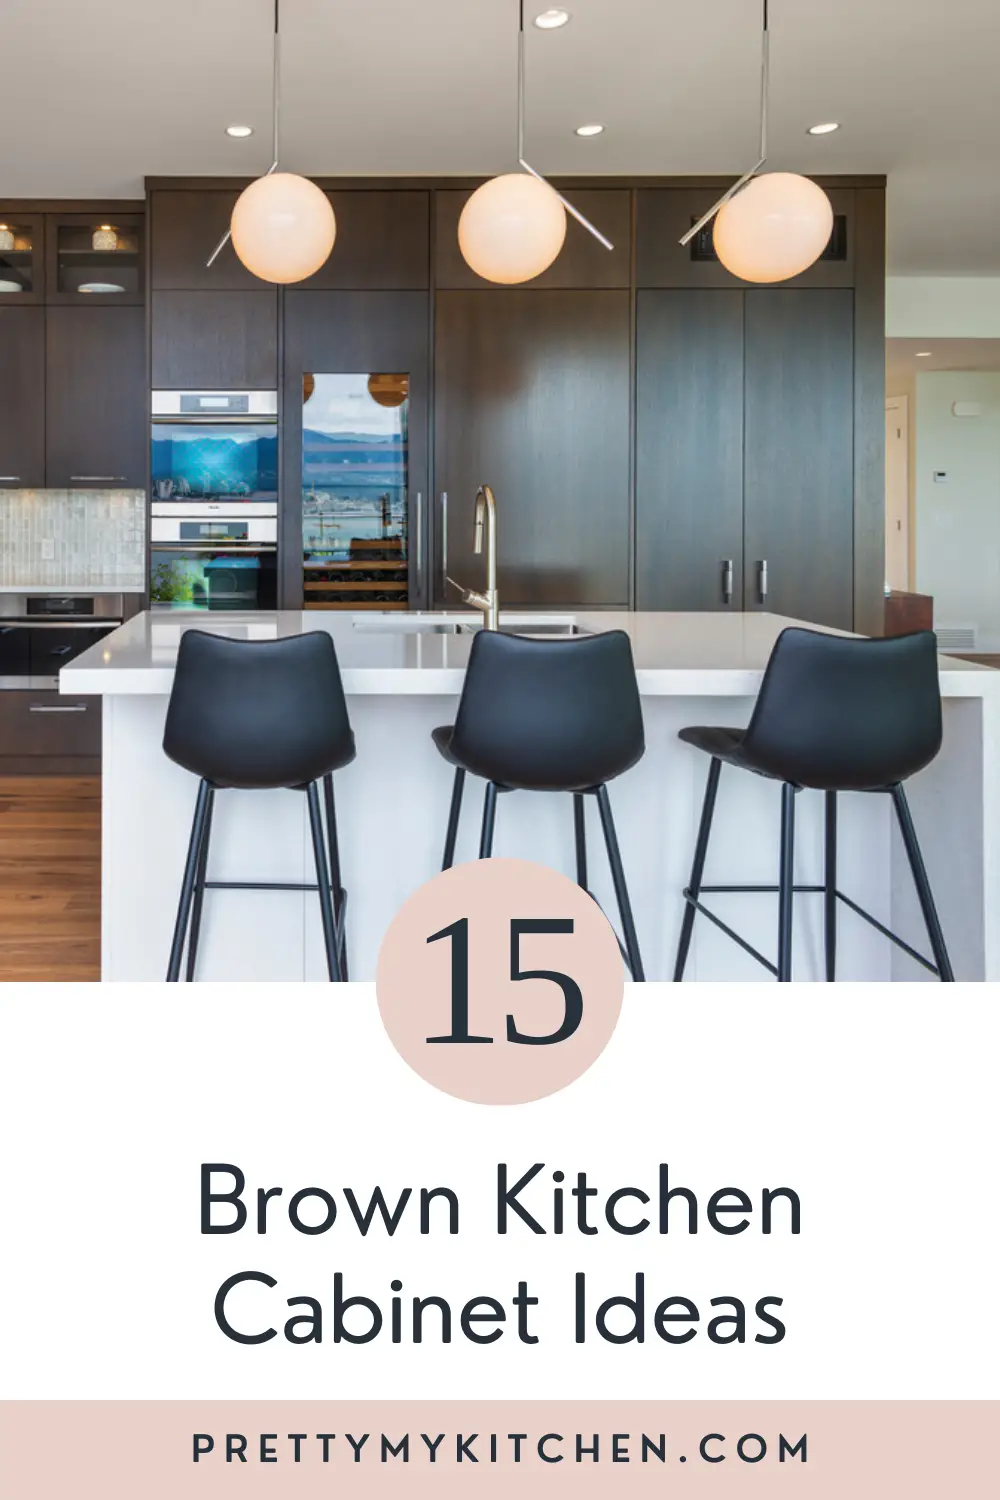 Brown cabinet kitchens